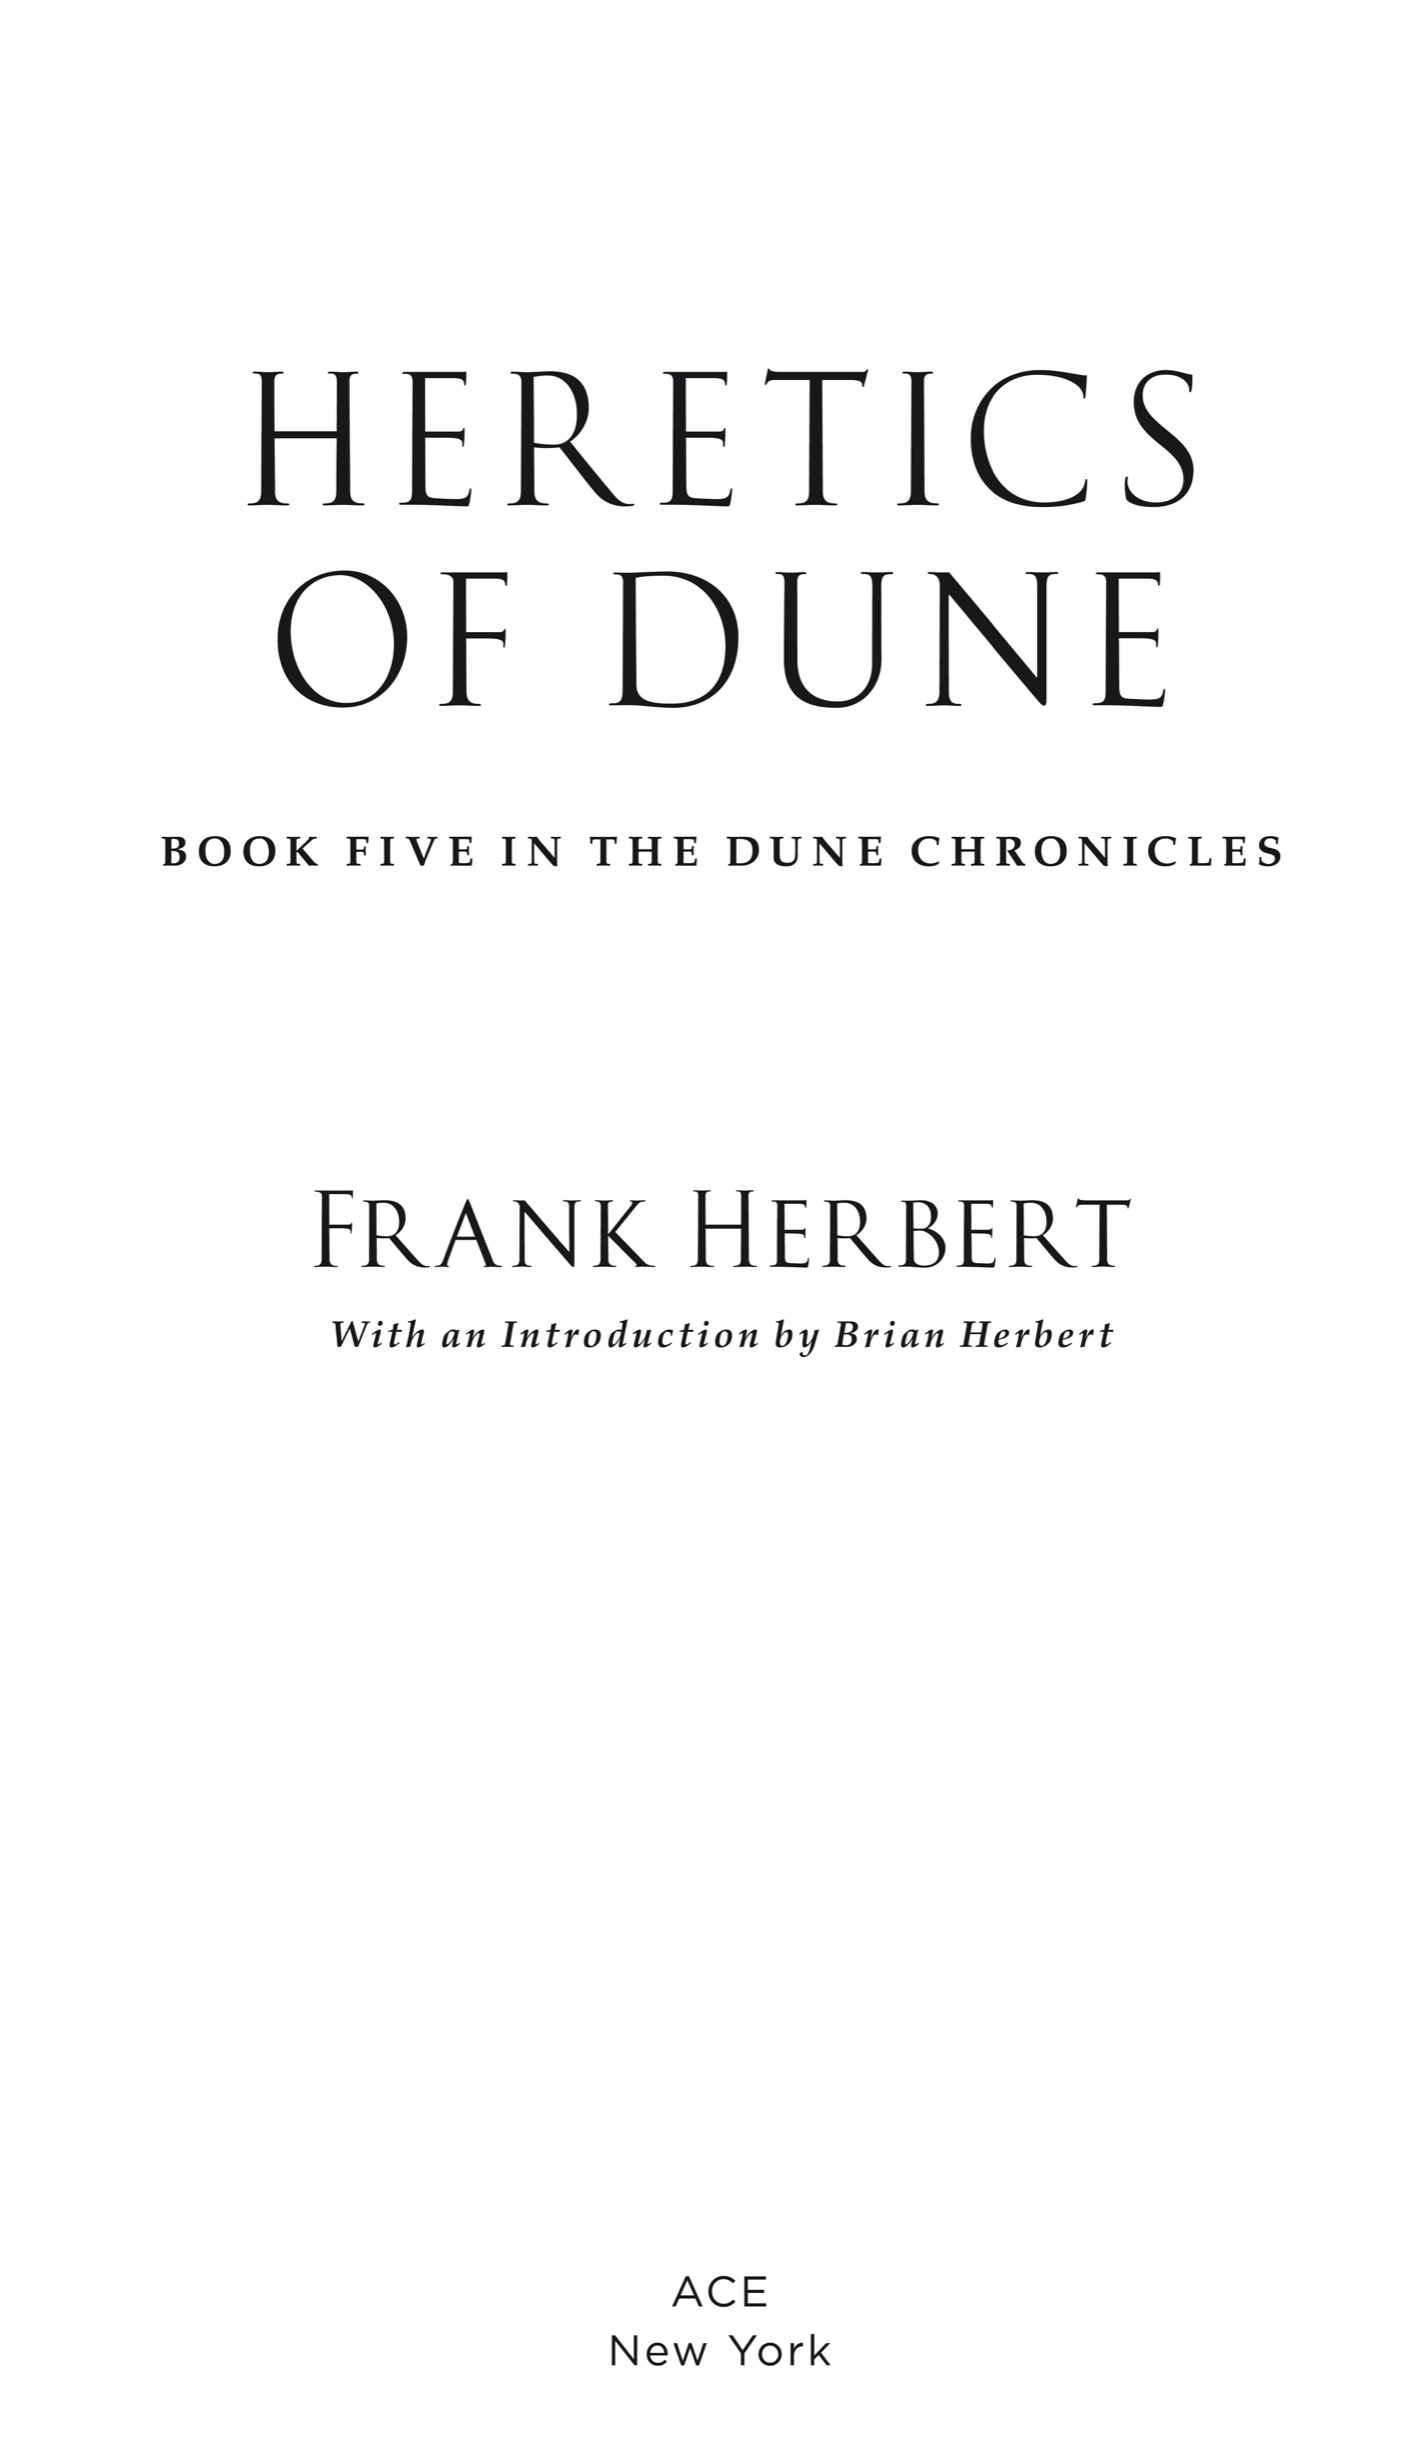 Book title, Heretics of Dune, author, Frank Herbert, imprint, Ace